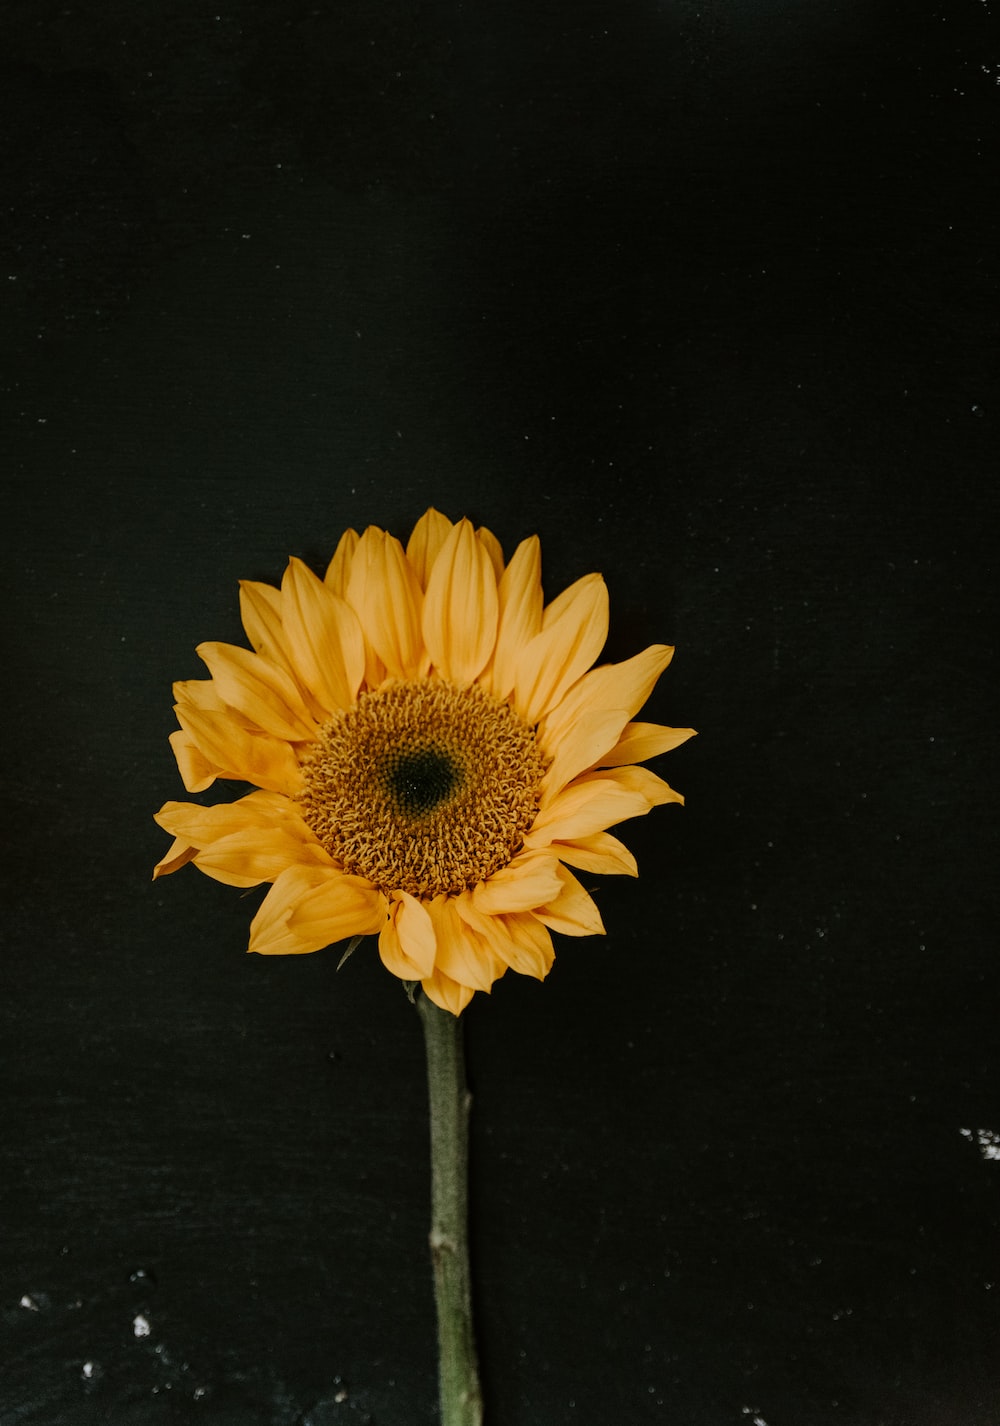 yellow sunflower on black background photo